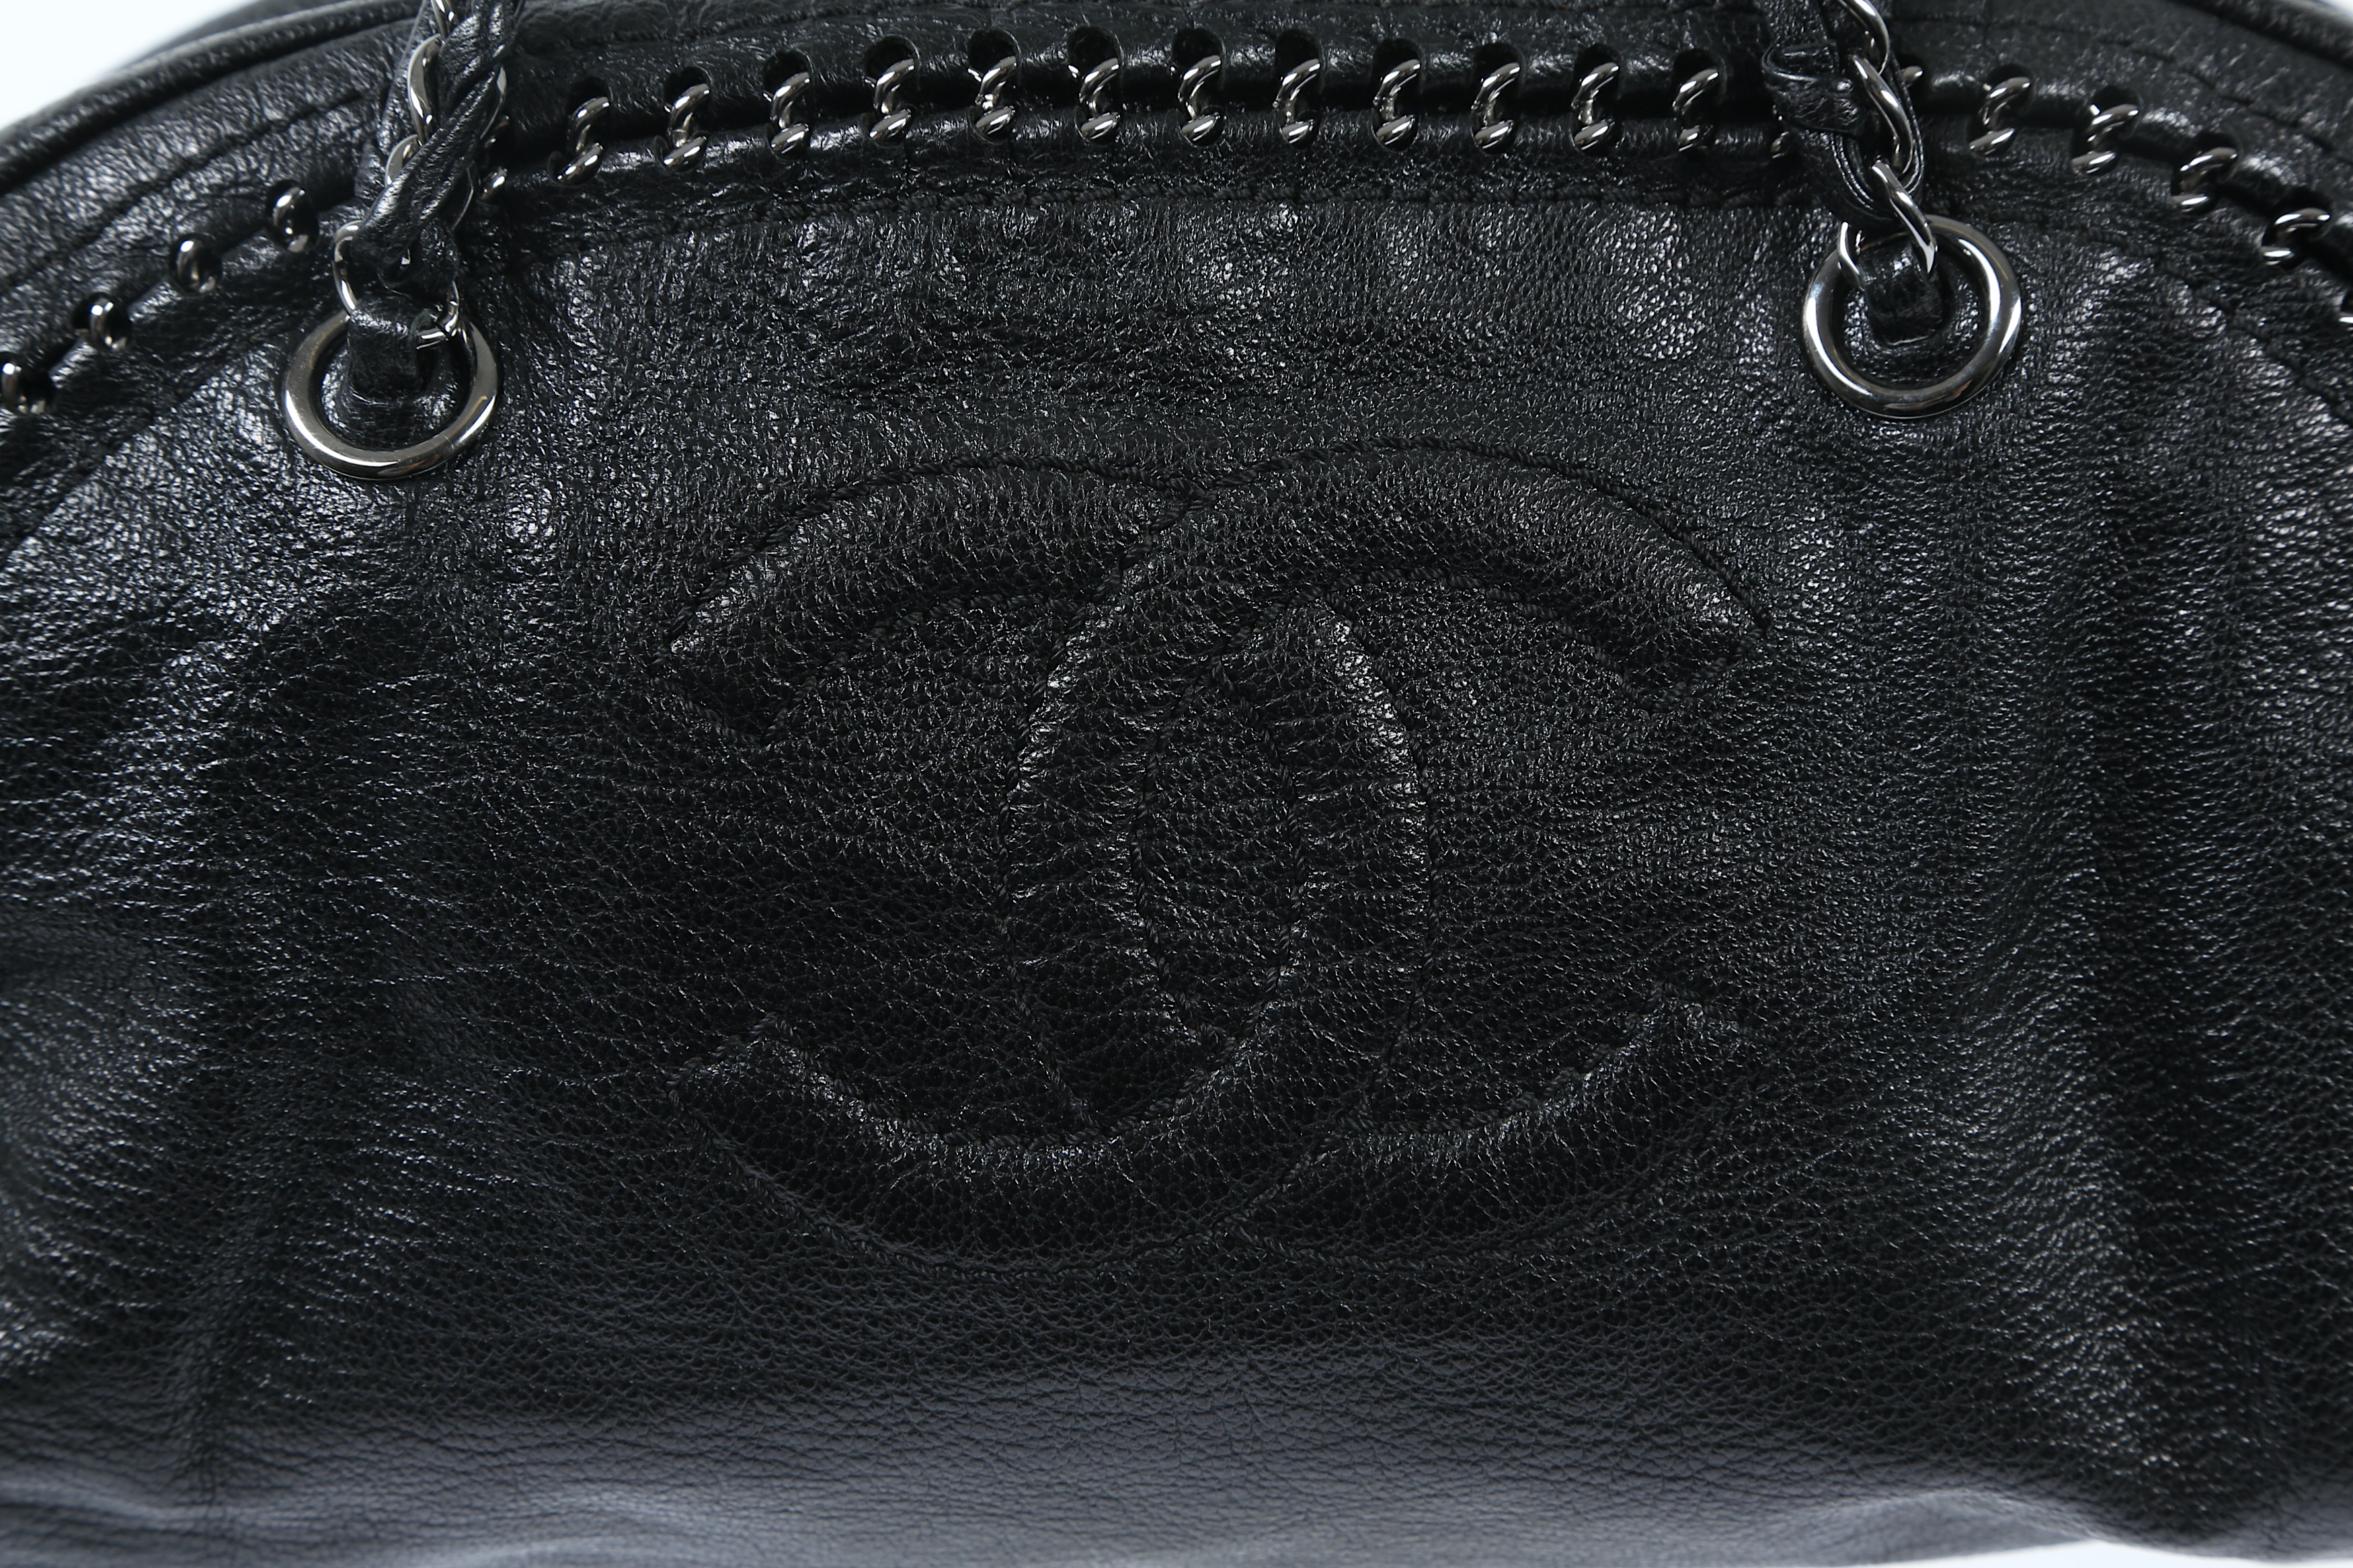 Chanel 2006 Luxe Ligne Large Metallic Leather Shoulder Bag